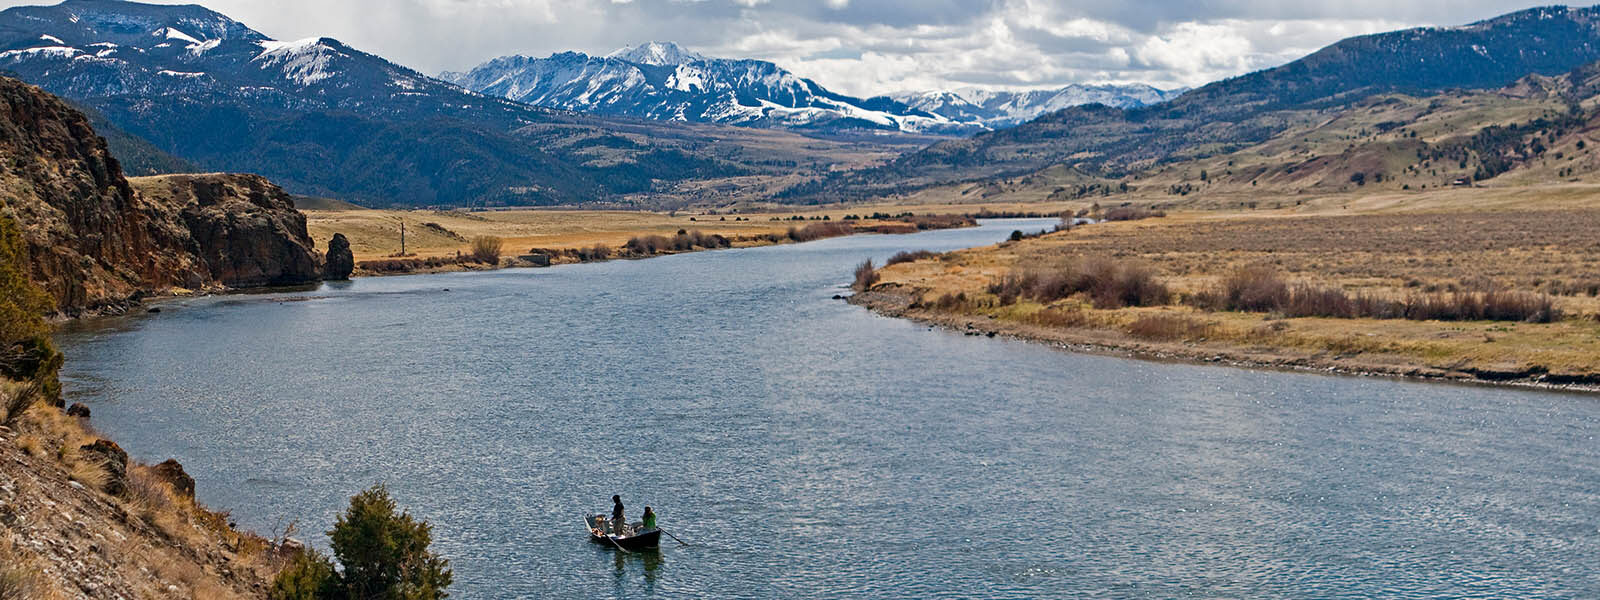 Blue-Ribbon Montana Fly Fishing Guides Near Yellowstone